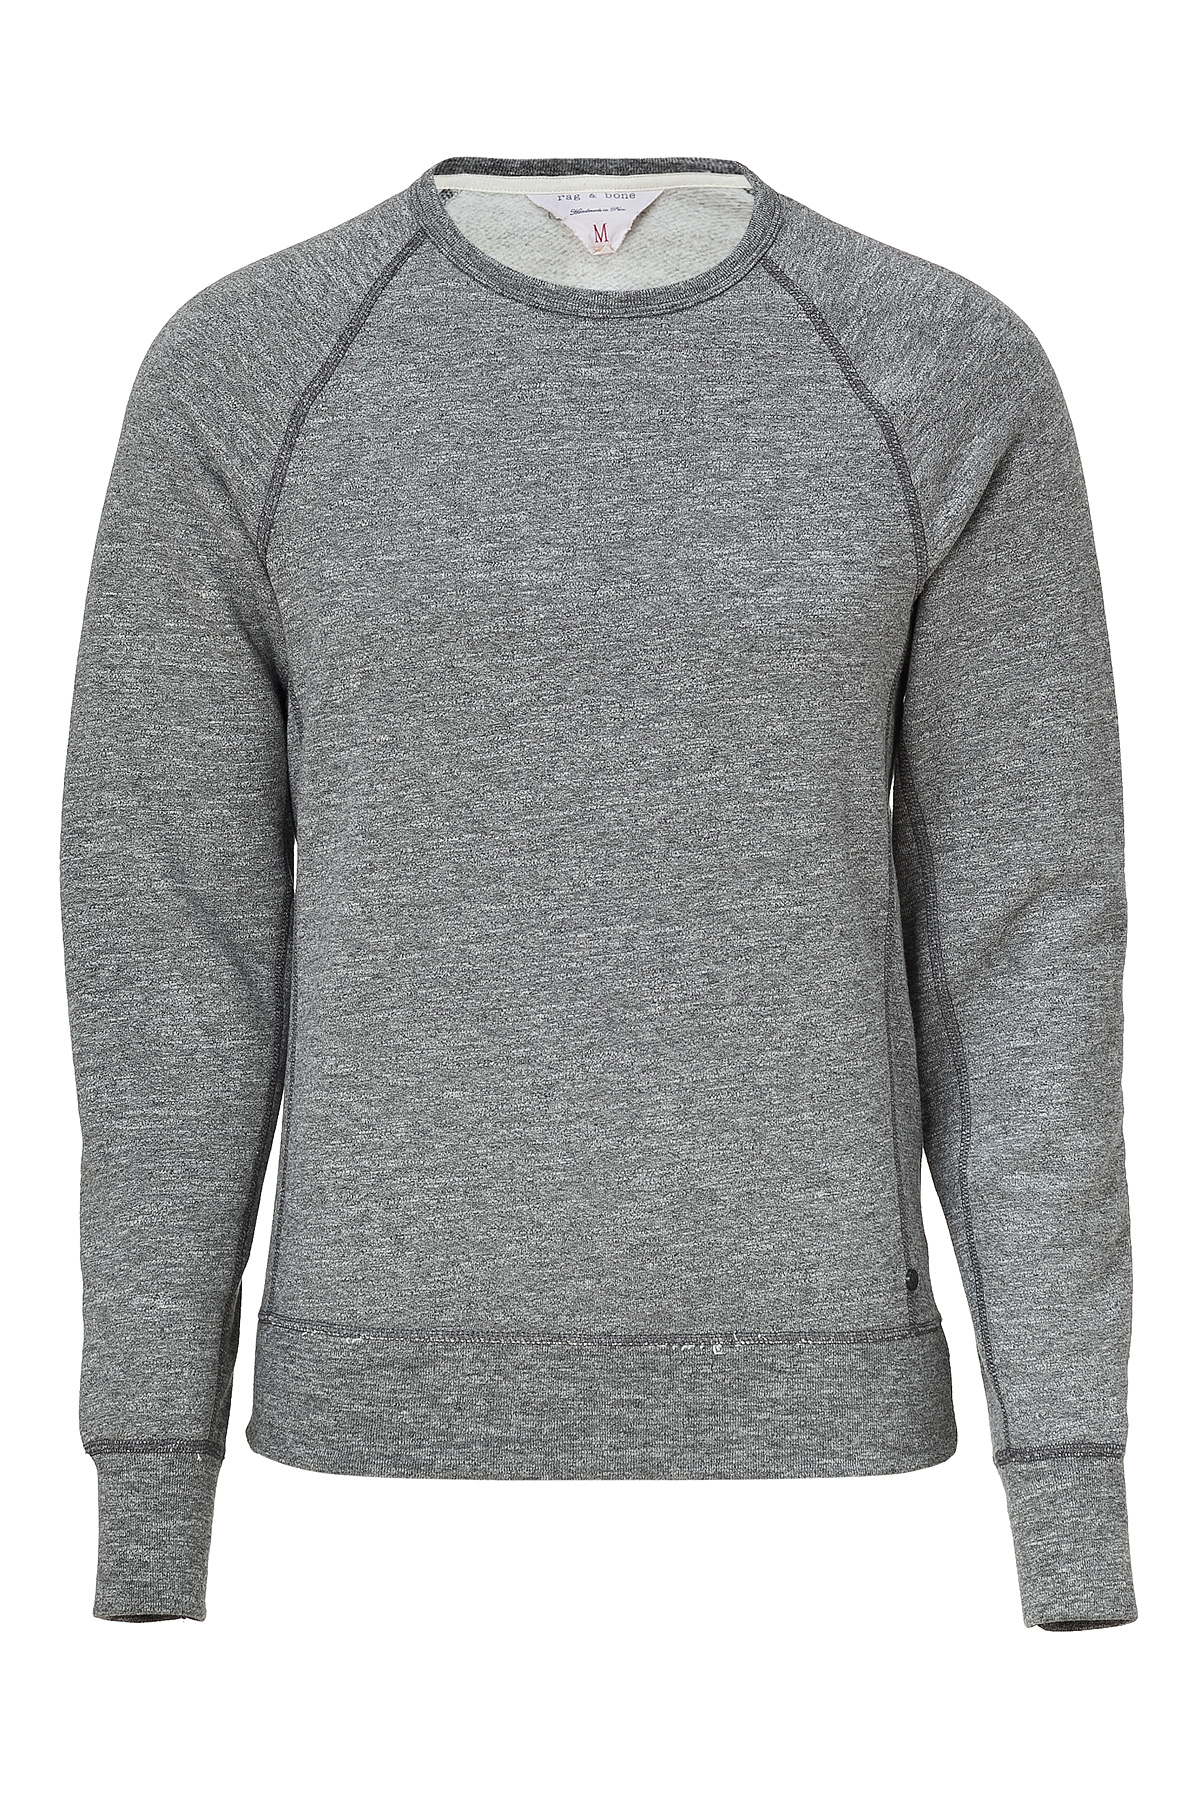 Rag & Bone Grey Cottonsuede Patch Sweatshirt in Gray for Men (grey) | Lyst